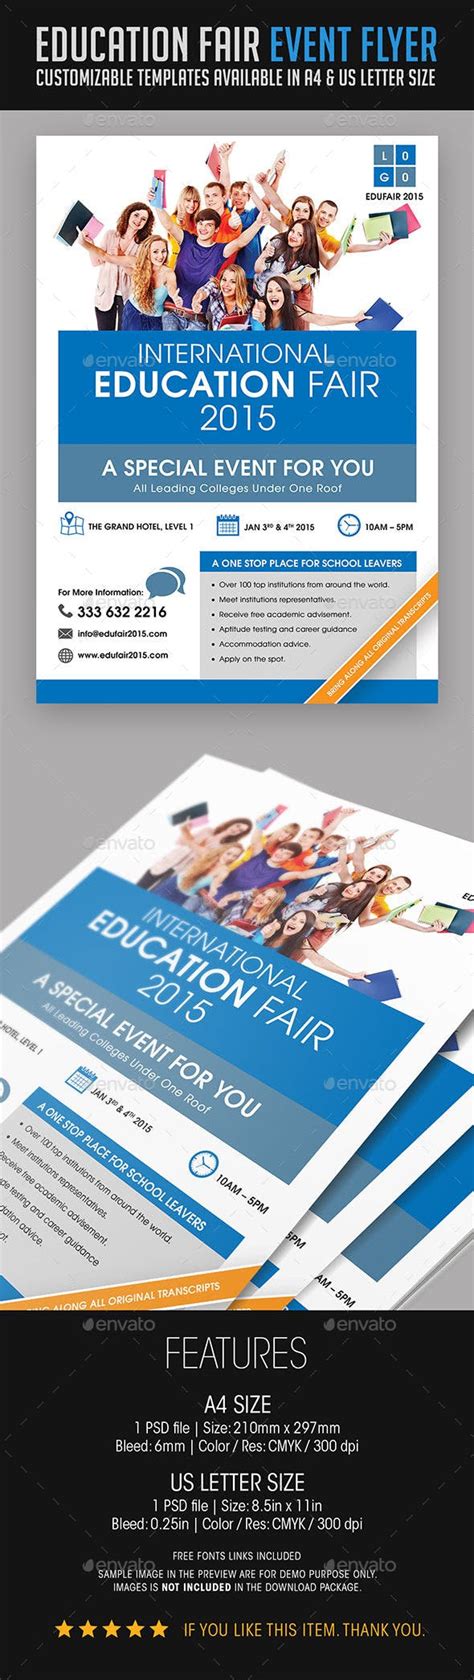 Education Fair Event Flyer By Soulmemoria Graphicriver